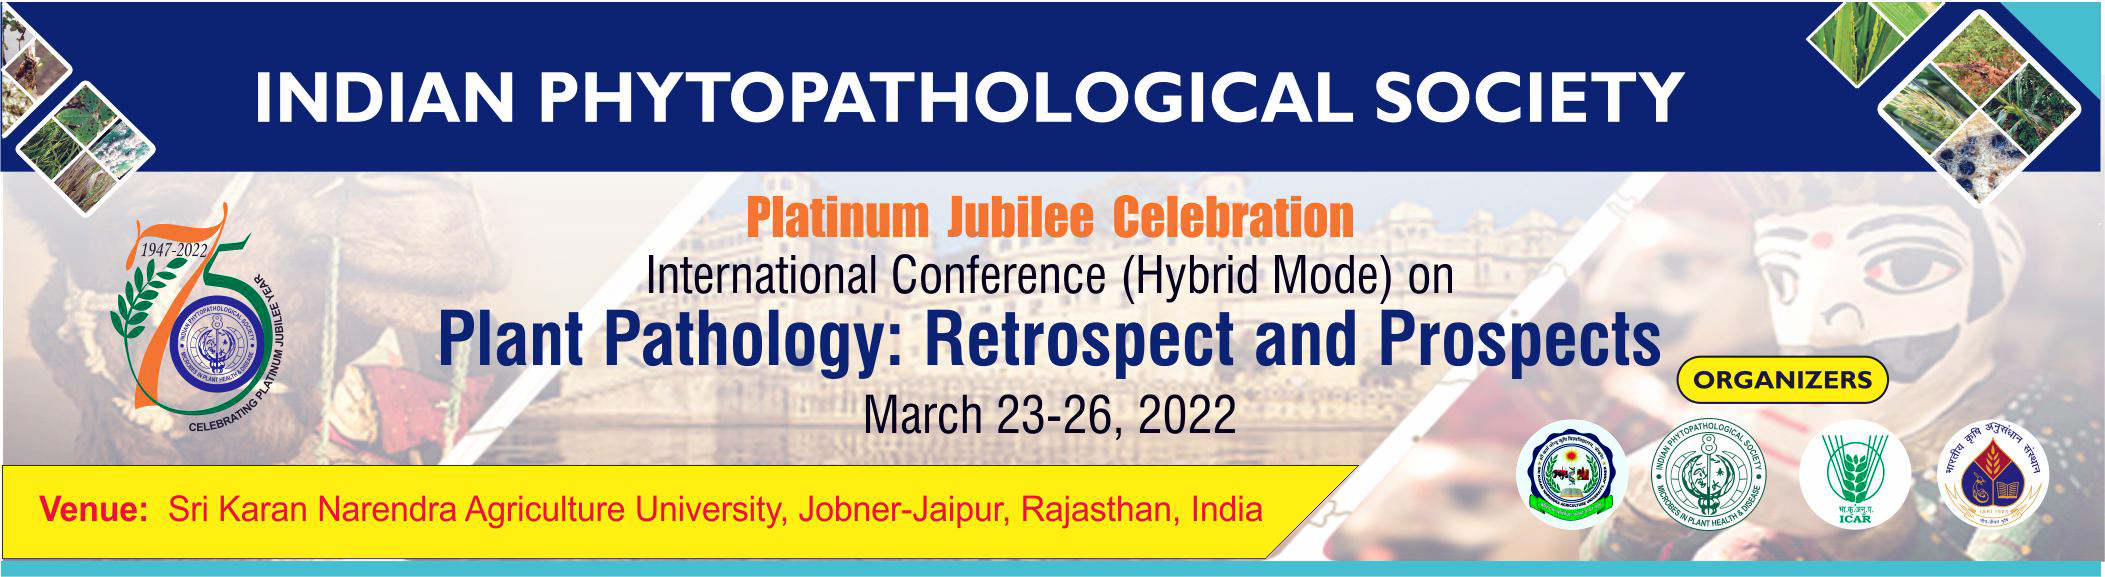 IPS International Conference, SKNAU, Jobner-Jaipur, Rajasthan, India, March 23-26, 2022